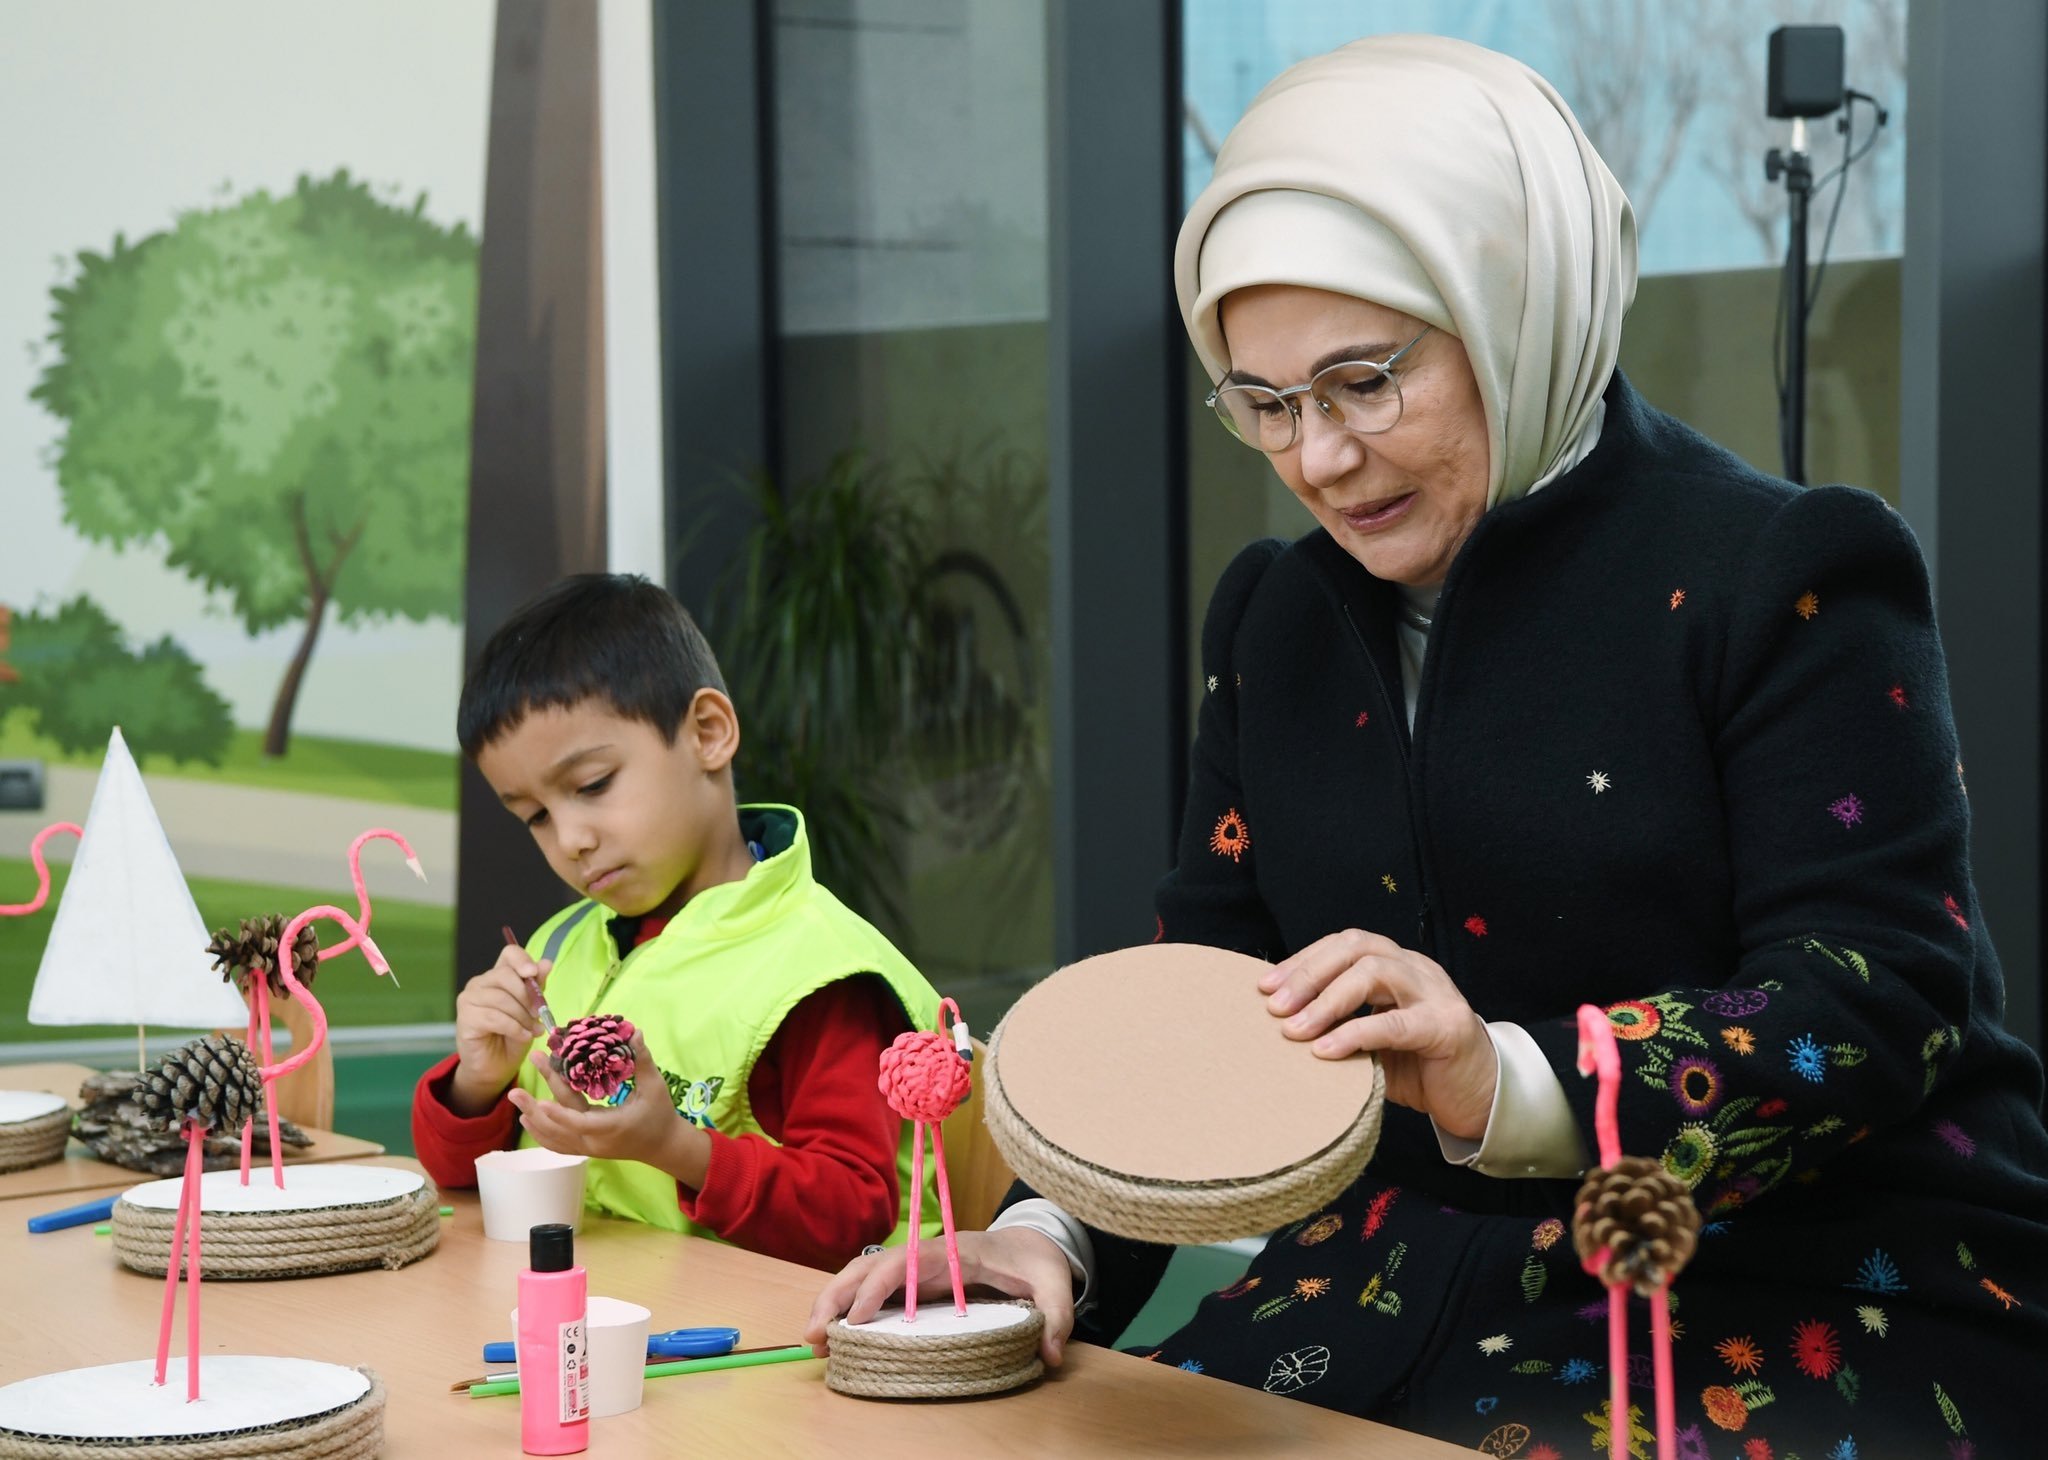 Emine Erdoğan inaugurates Türkiye's first zero waste education center